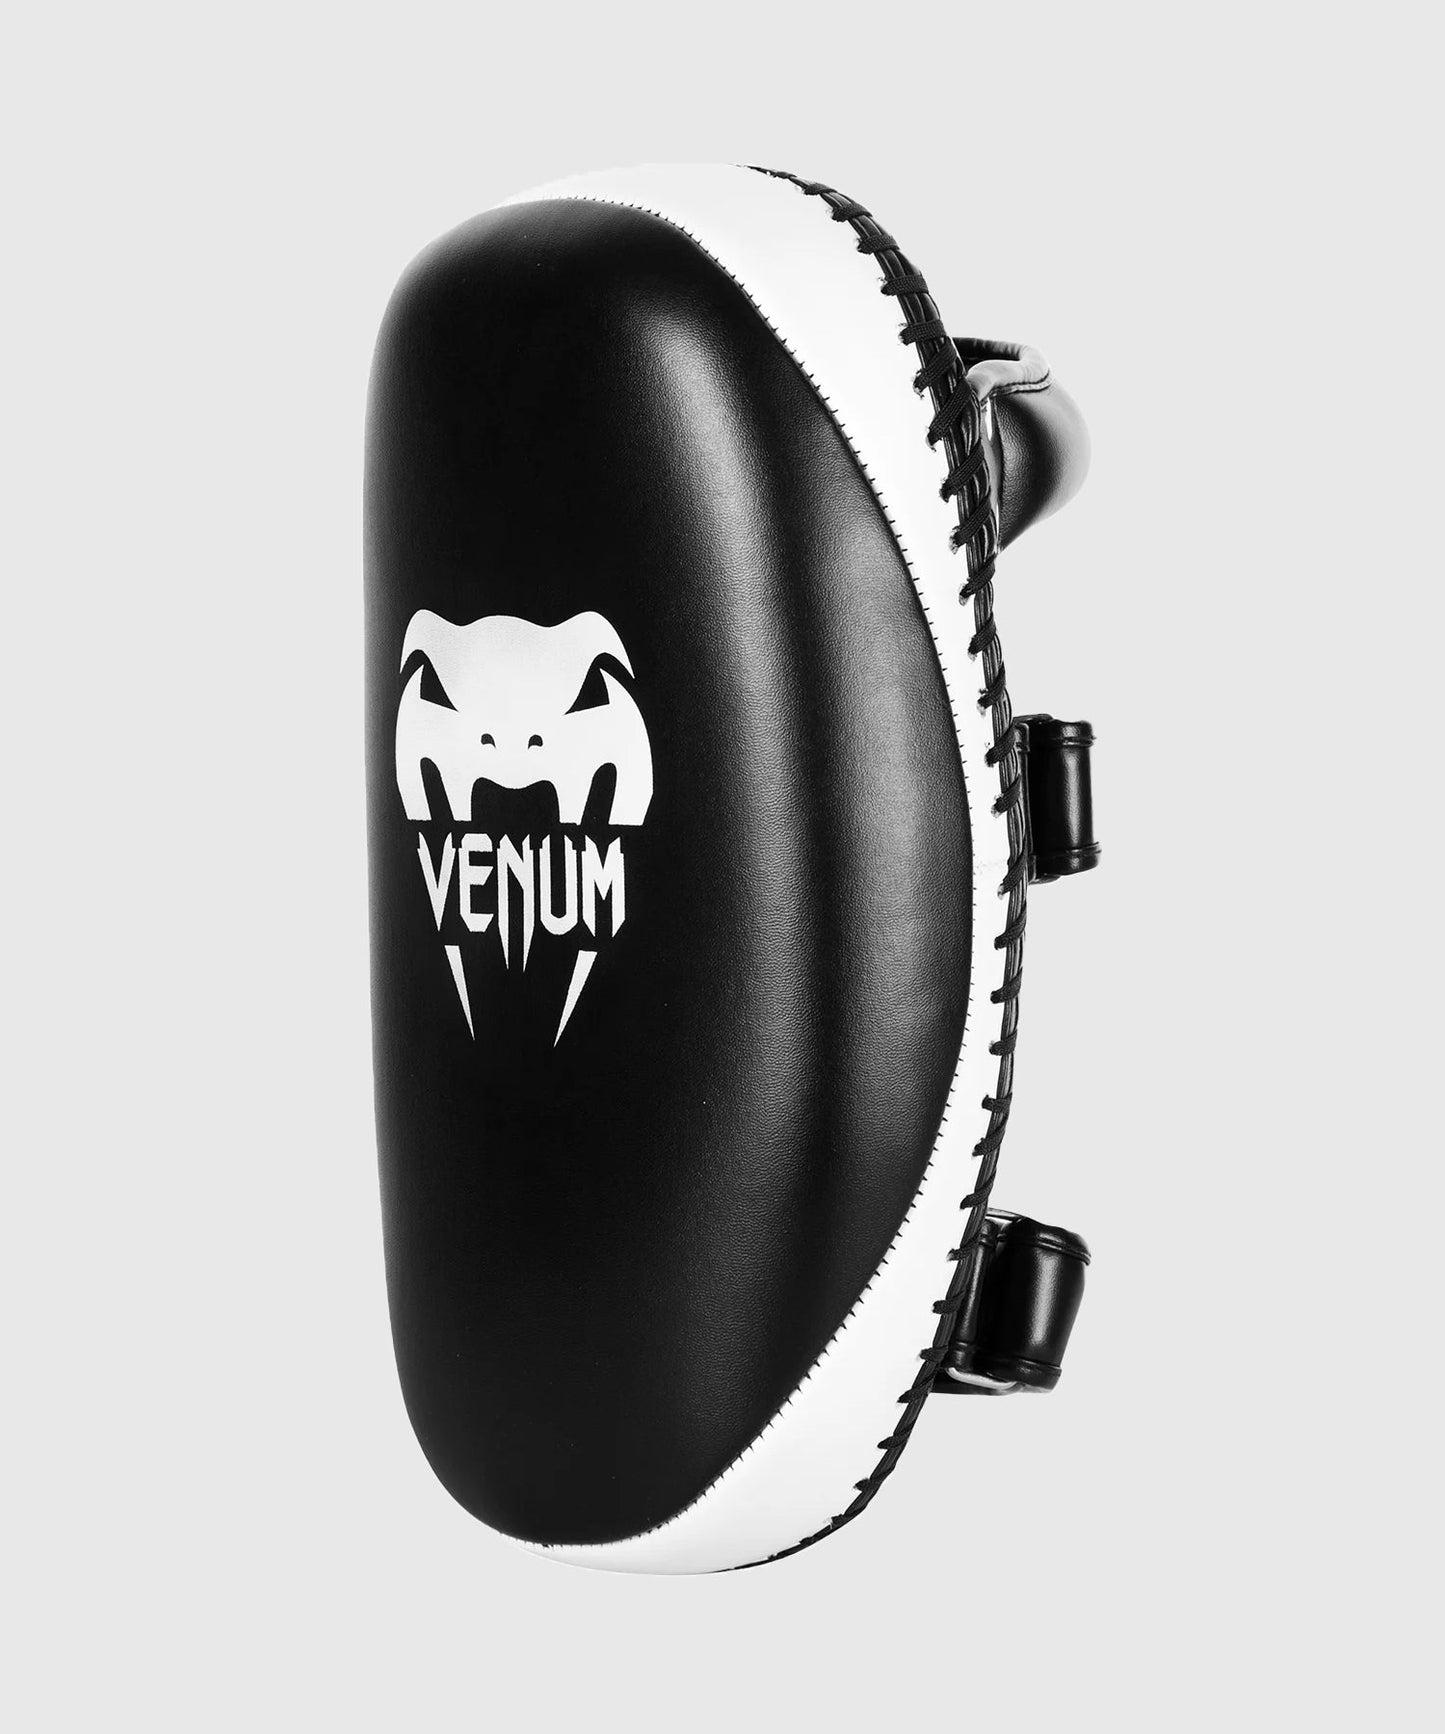 Venum Light Kick Pads - Skintex Leather - Black/Ice (Pair)